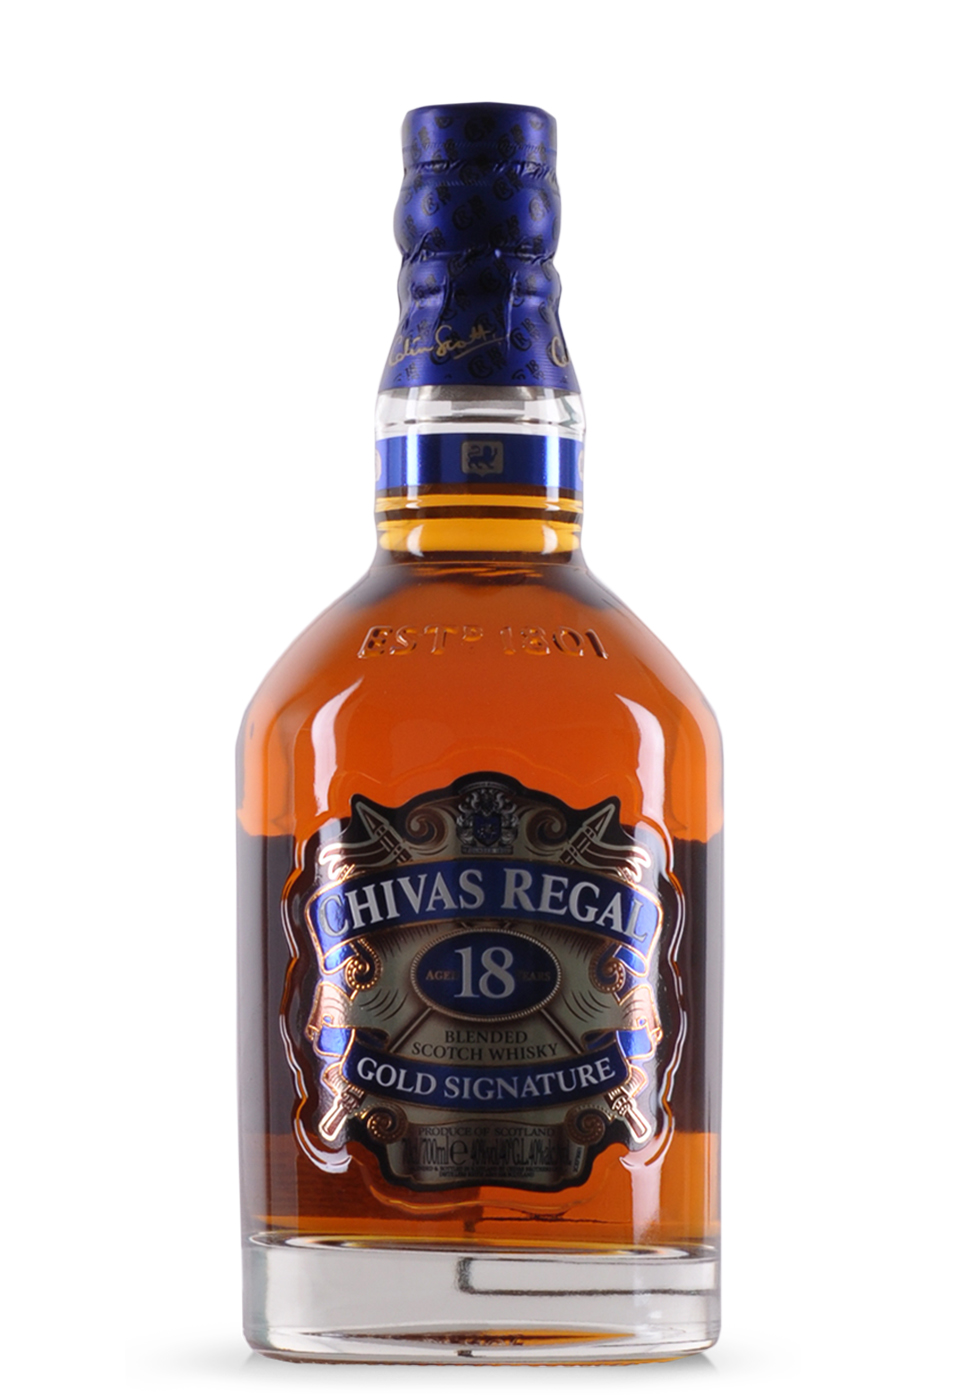 Whisky Chivas Regal 18 ani, Gold Signature (0.7L) Image